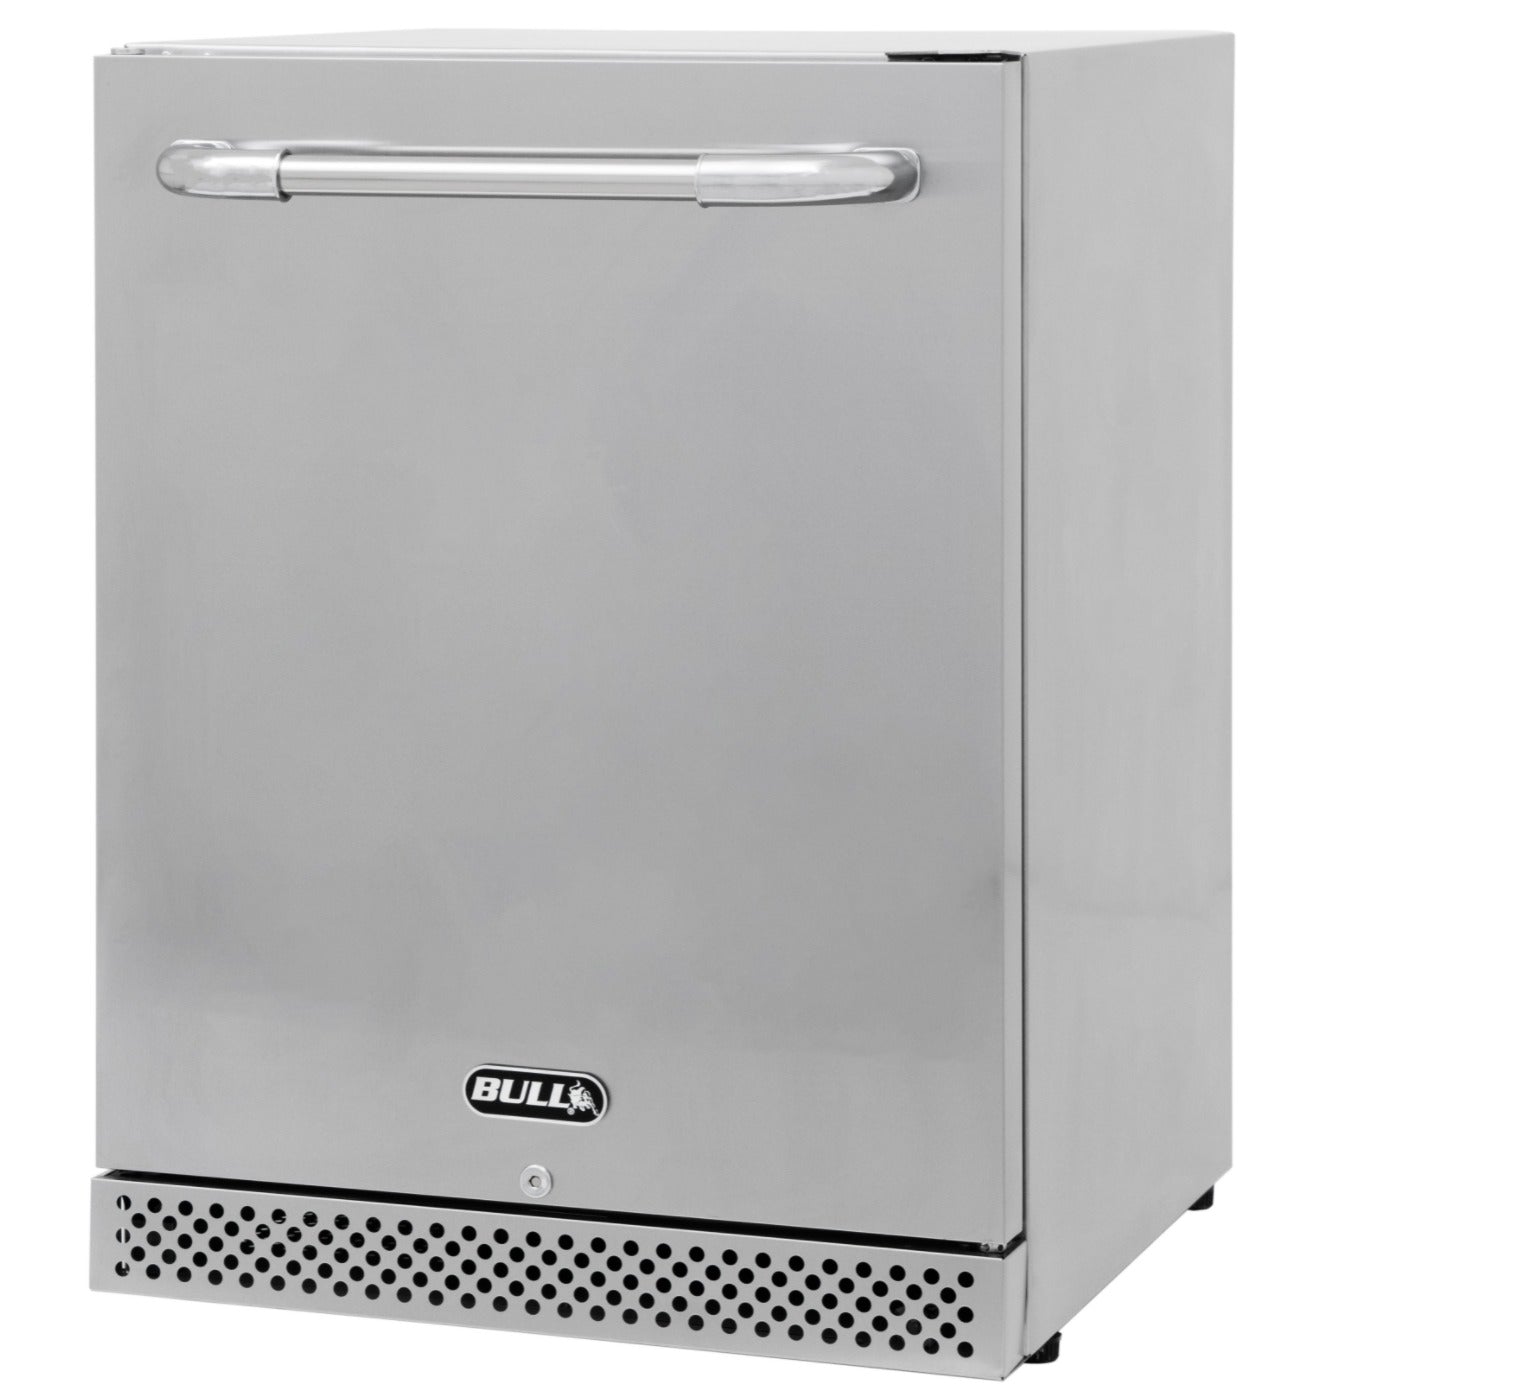 Bull Premium Commercial Outdoor Refrigerator Series ll 840H